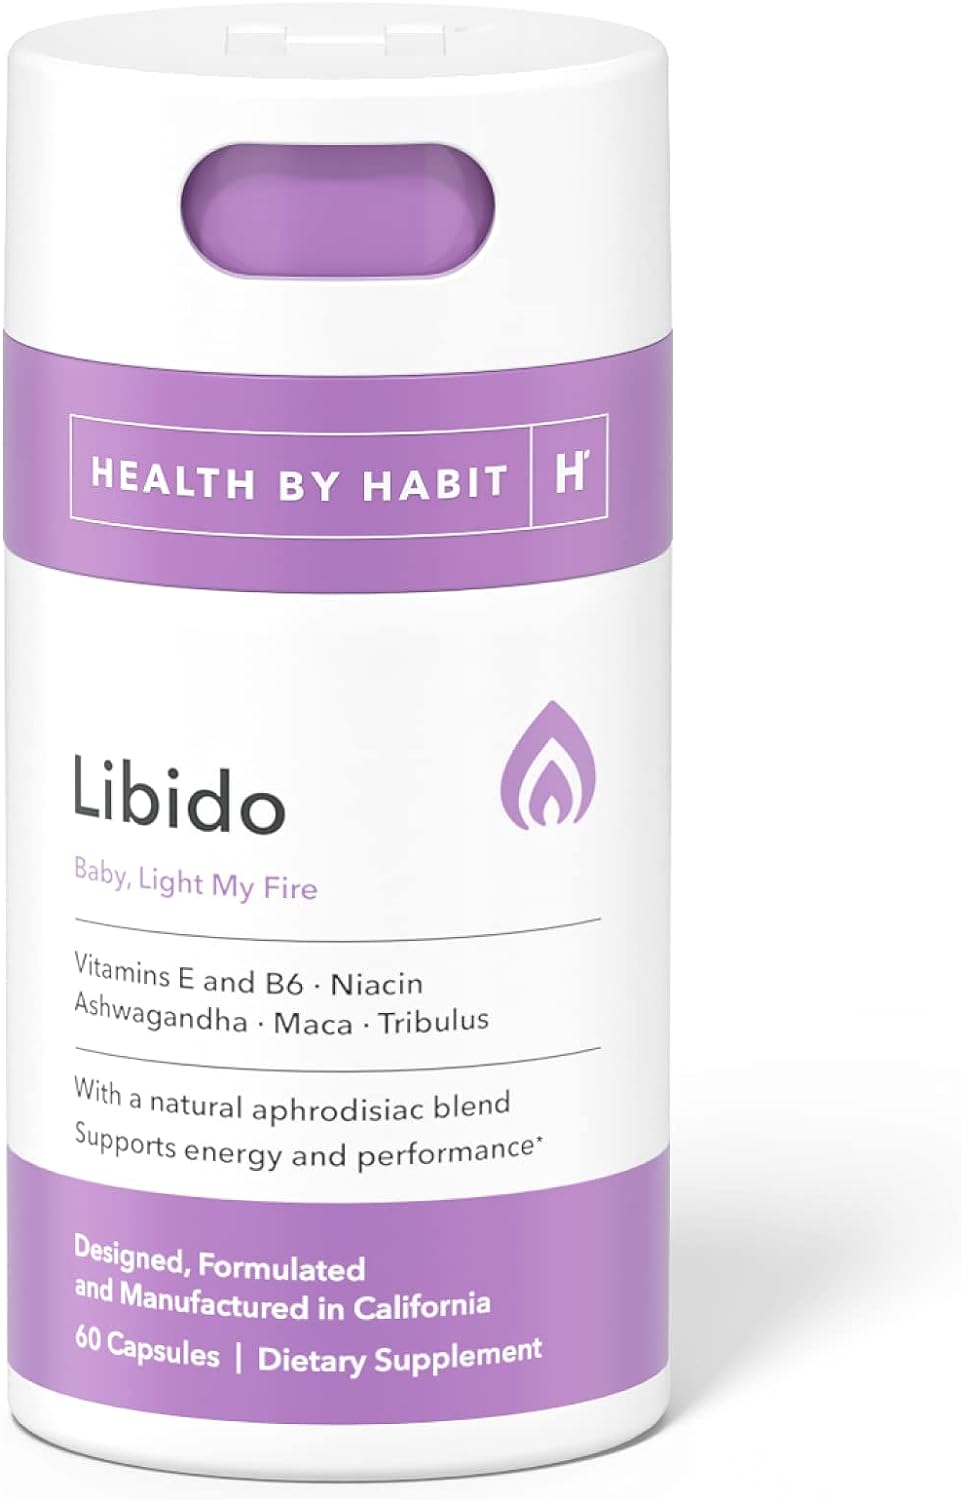 Health By Habit Libido Blend (60 Capsules) - Natural Aphrodisiac Blend with Maca, Ashwagandha, Vegan, Non-GMO, Sugar-Free (1 Pack)